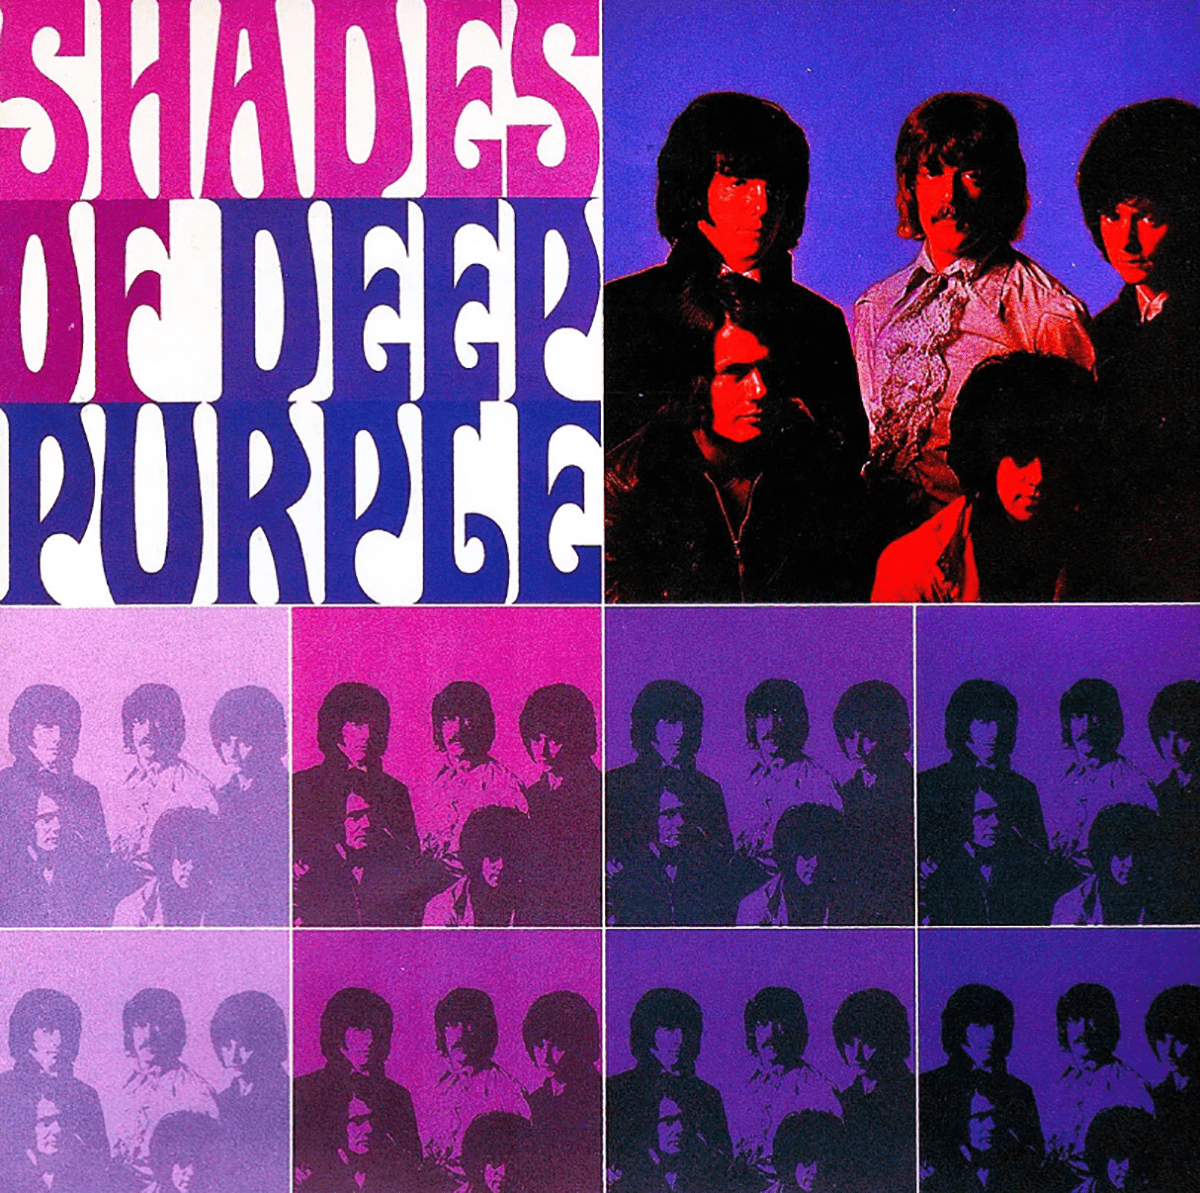 Cover des Studioalbums "Shades of Deep Purple", 1968